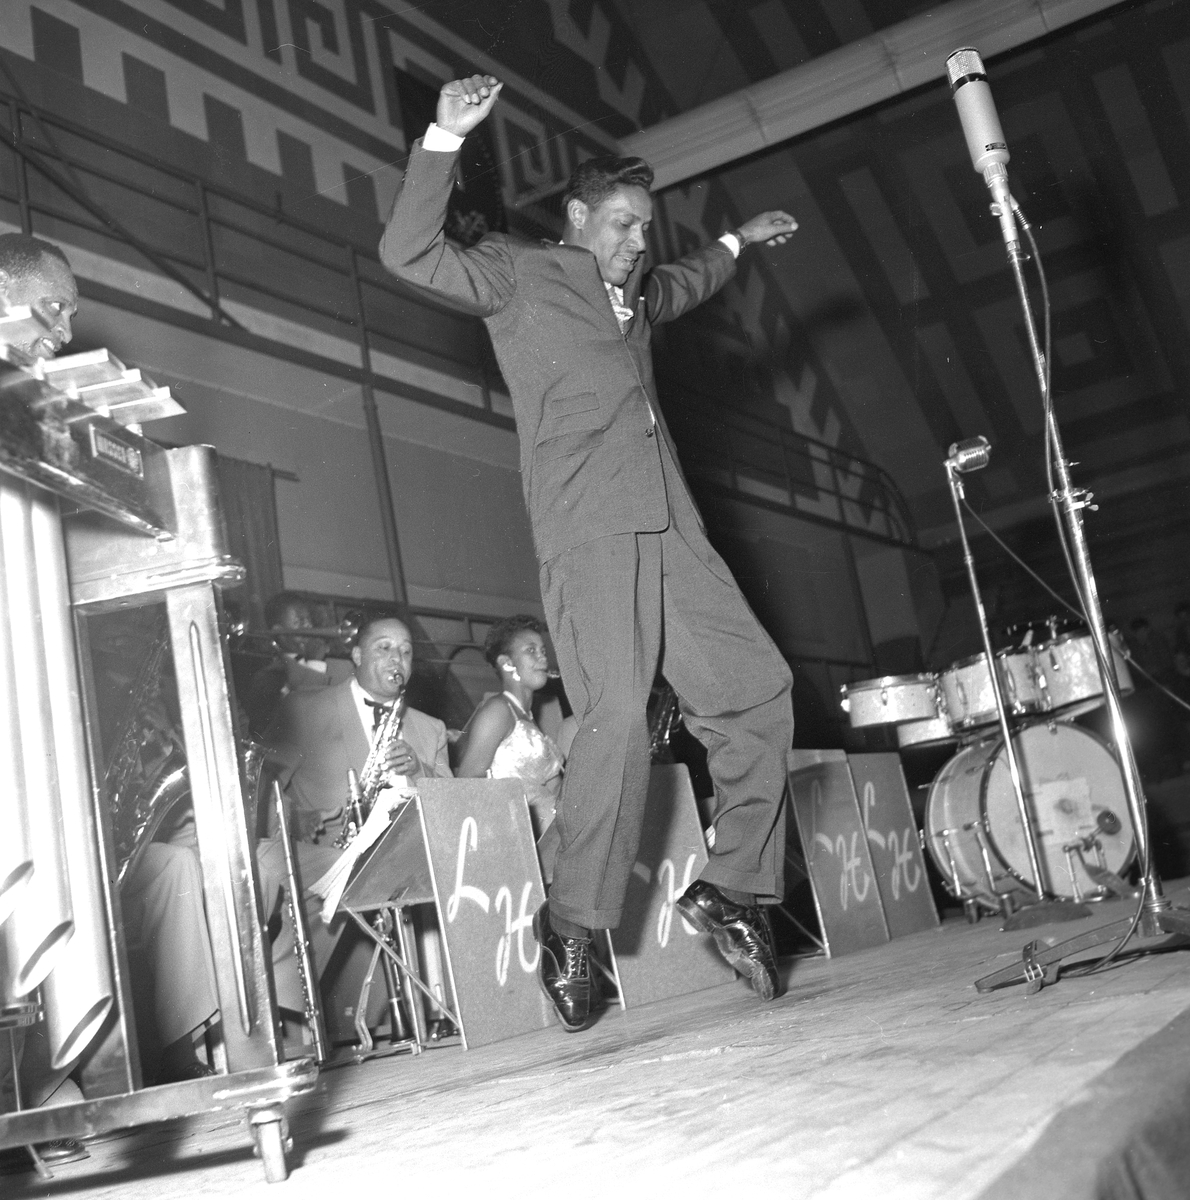 Lionel Hampton.
November 1956.